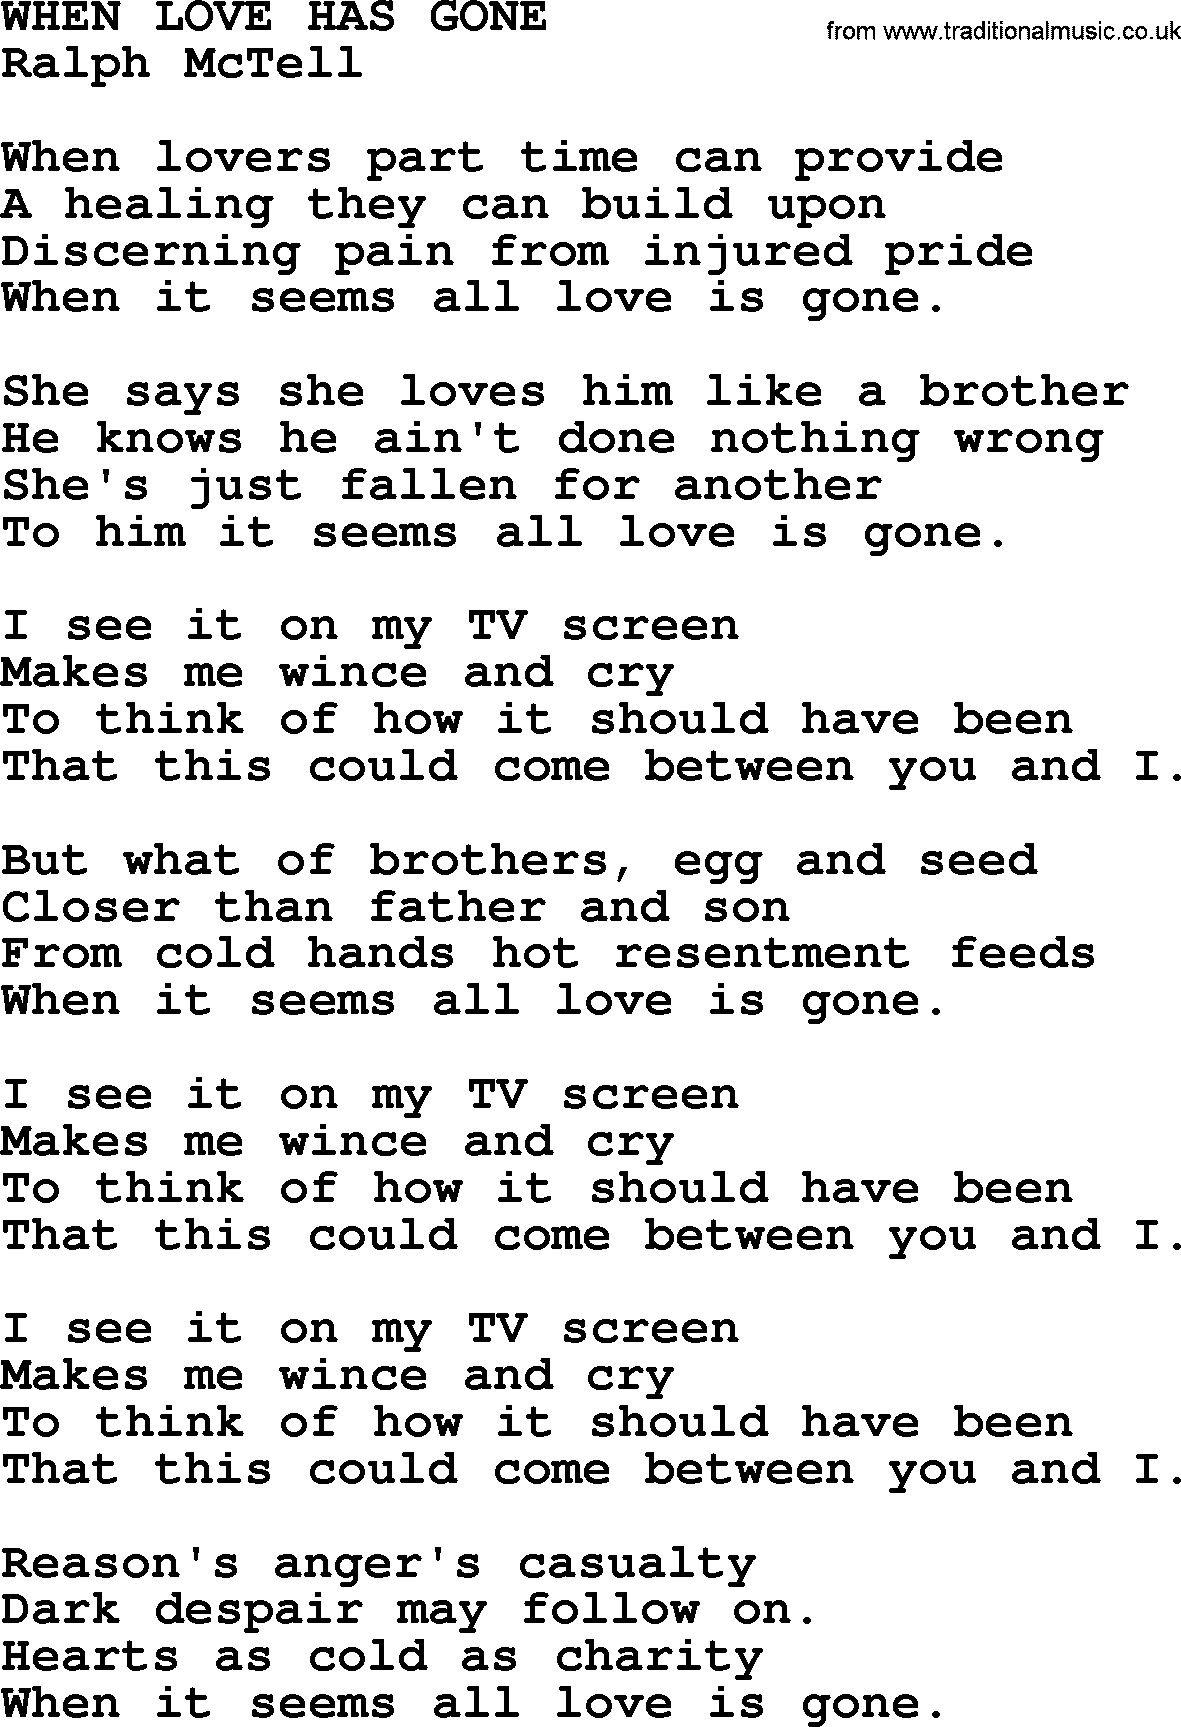 Ralph McTell Song: When Love Has Gone, lyrics